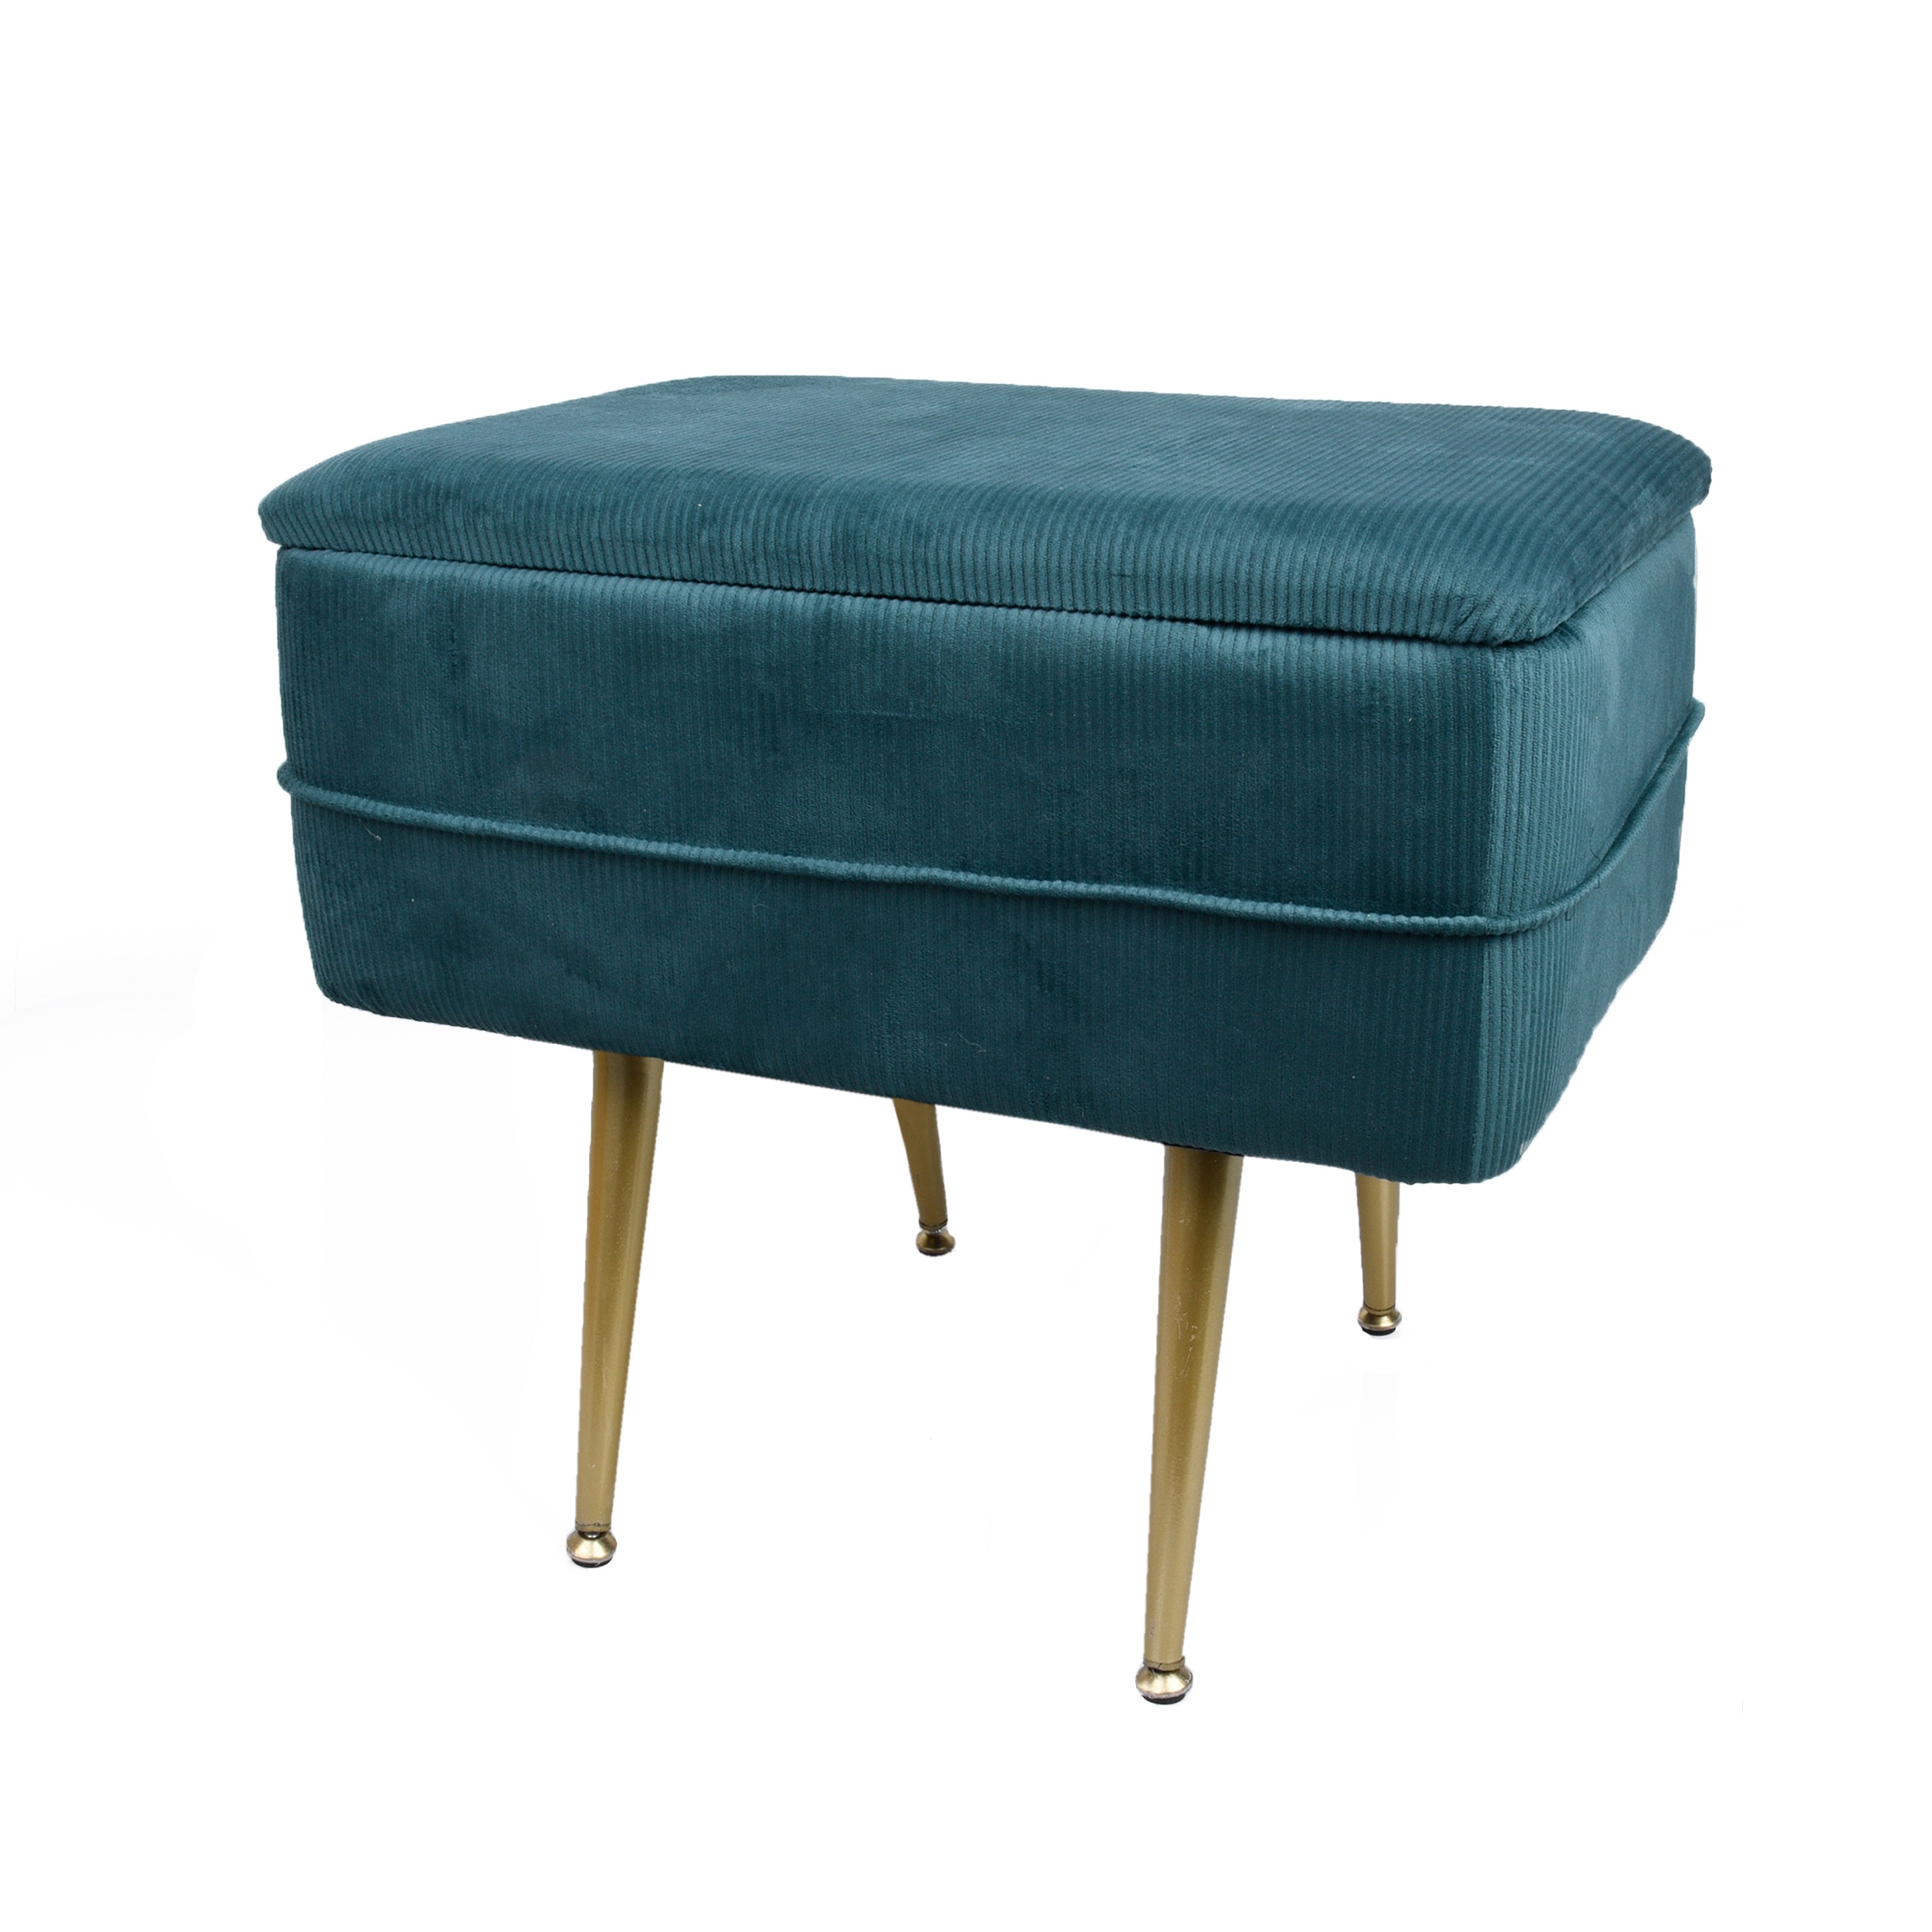 Modern Living Room luxury chair velvet storage stools & ottomans with metal legs